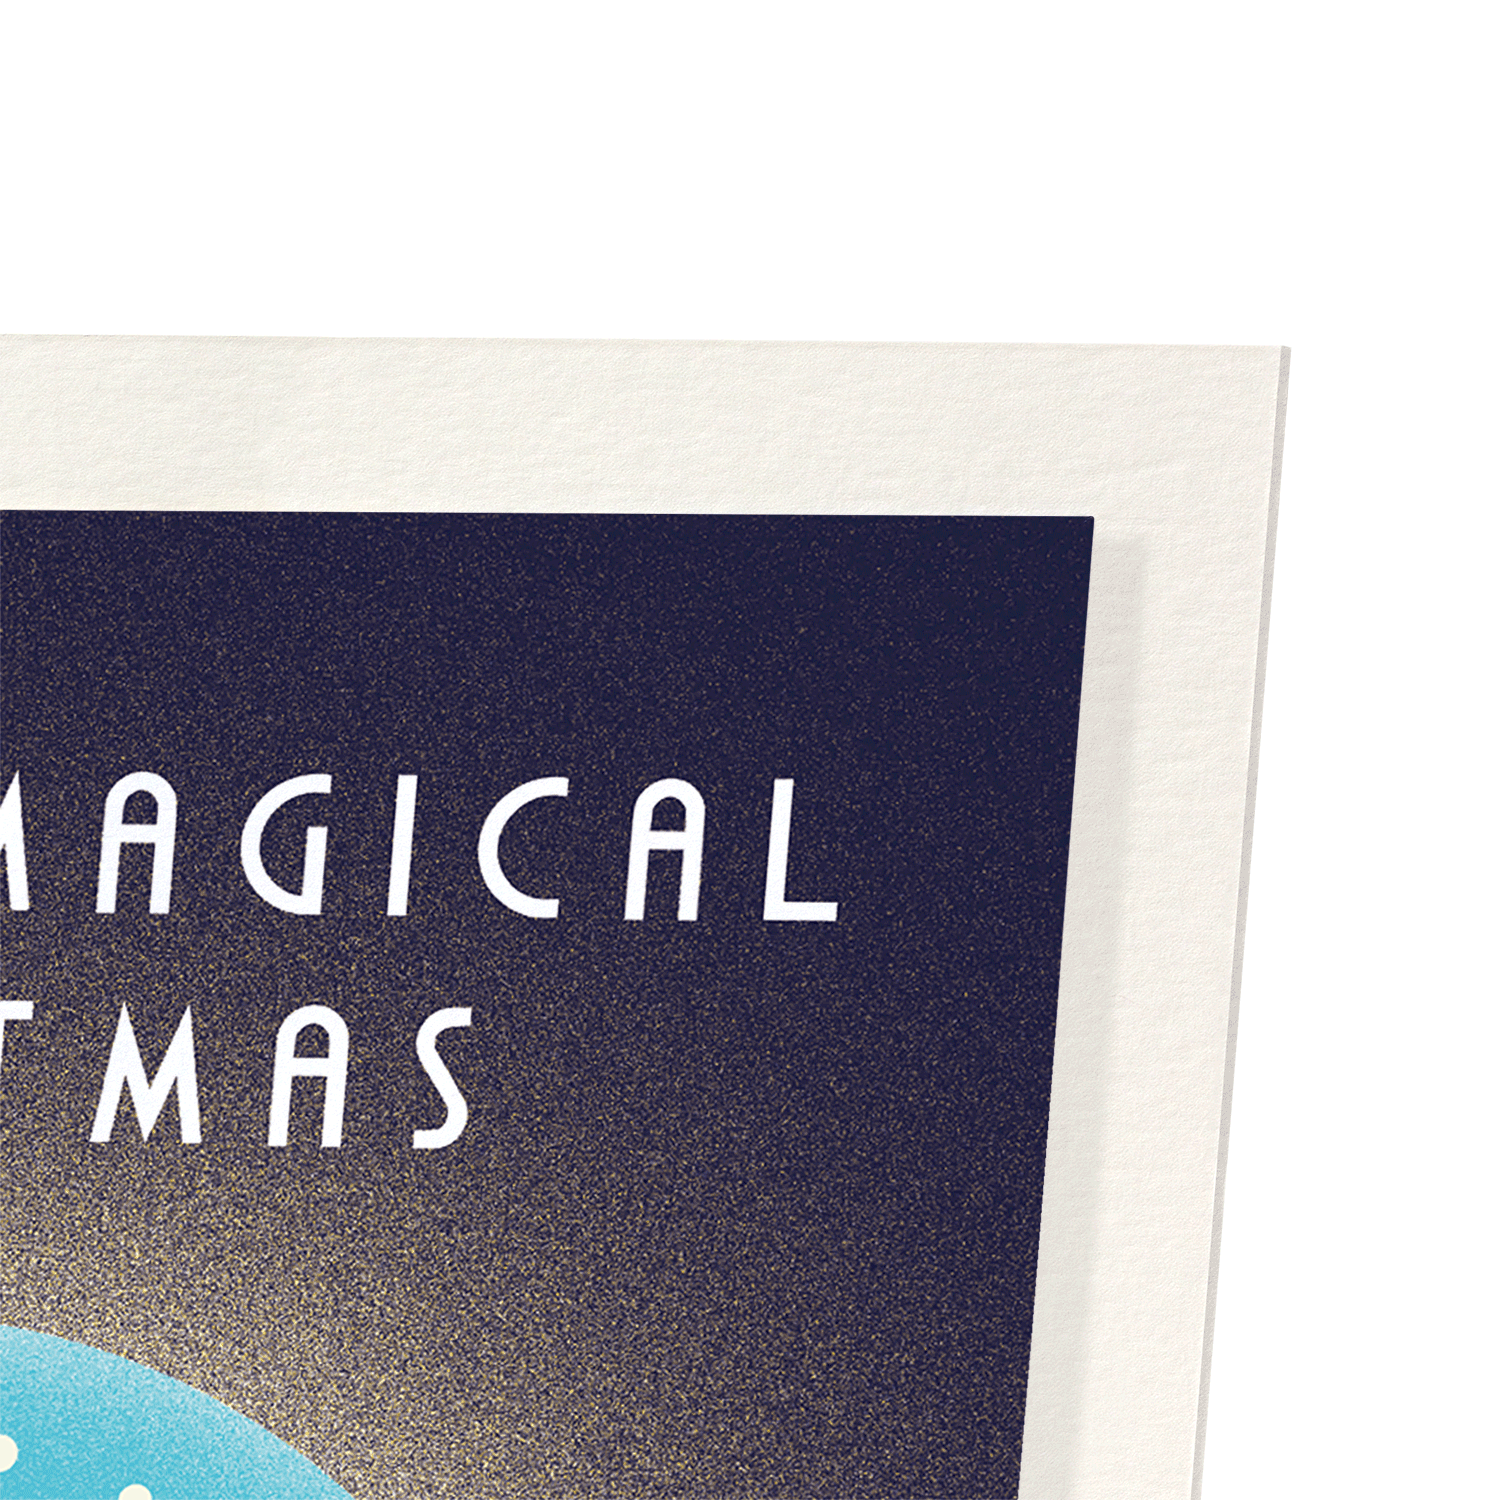 MAGICAL CHRISTMAS GLOBE: Modern deco Art Print